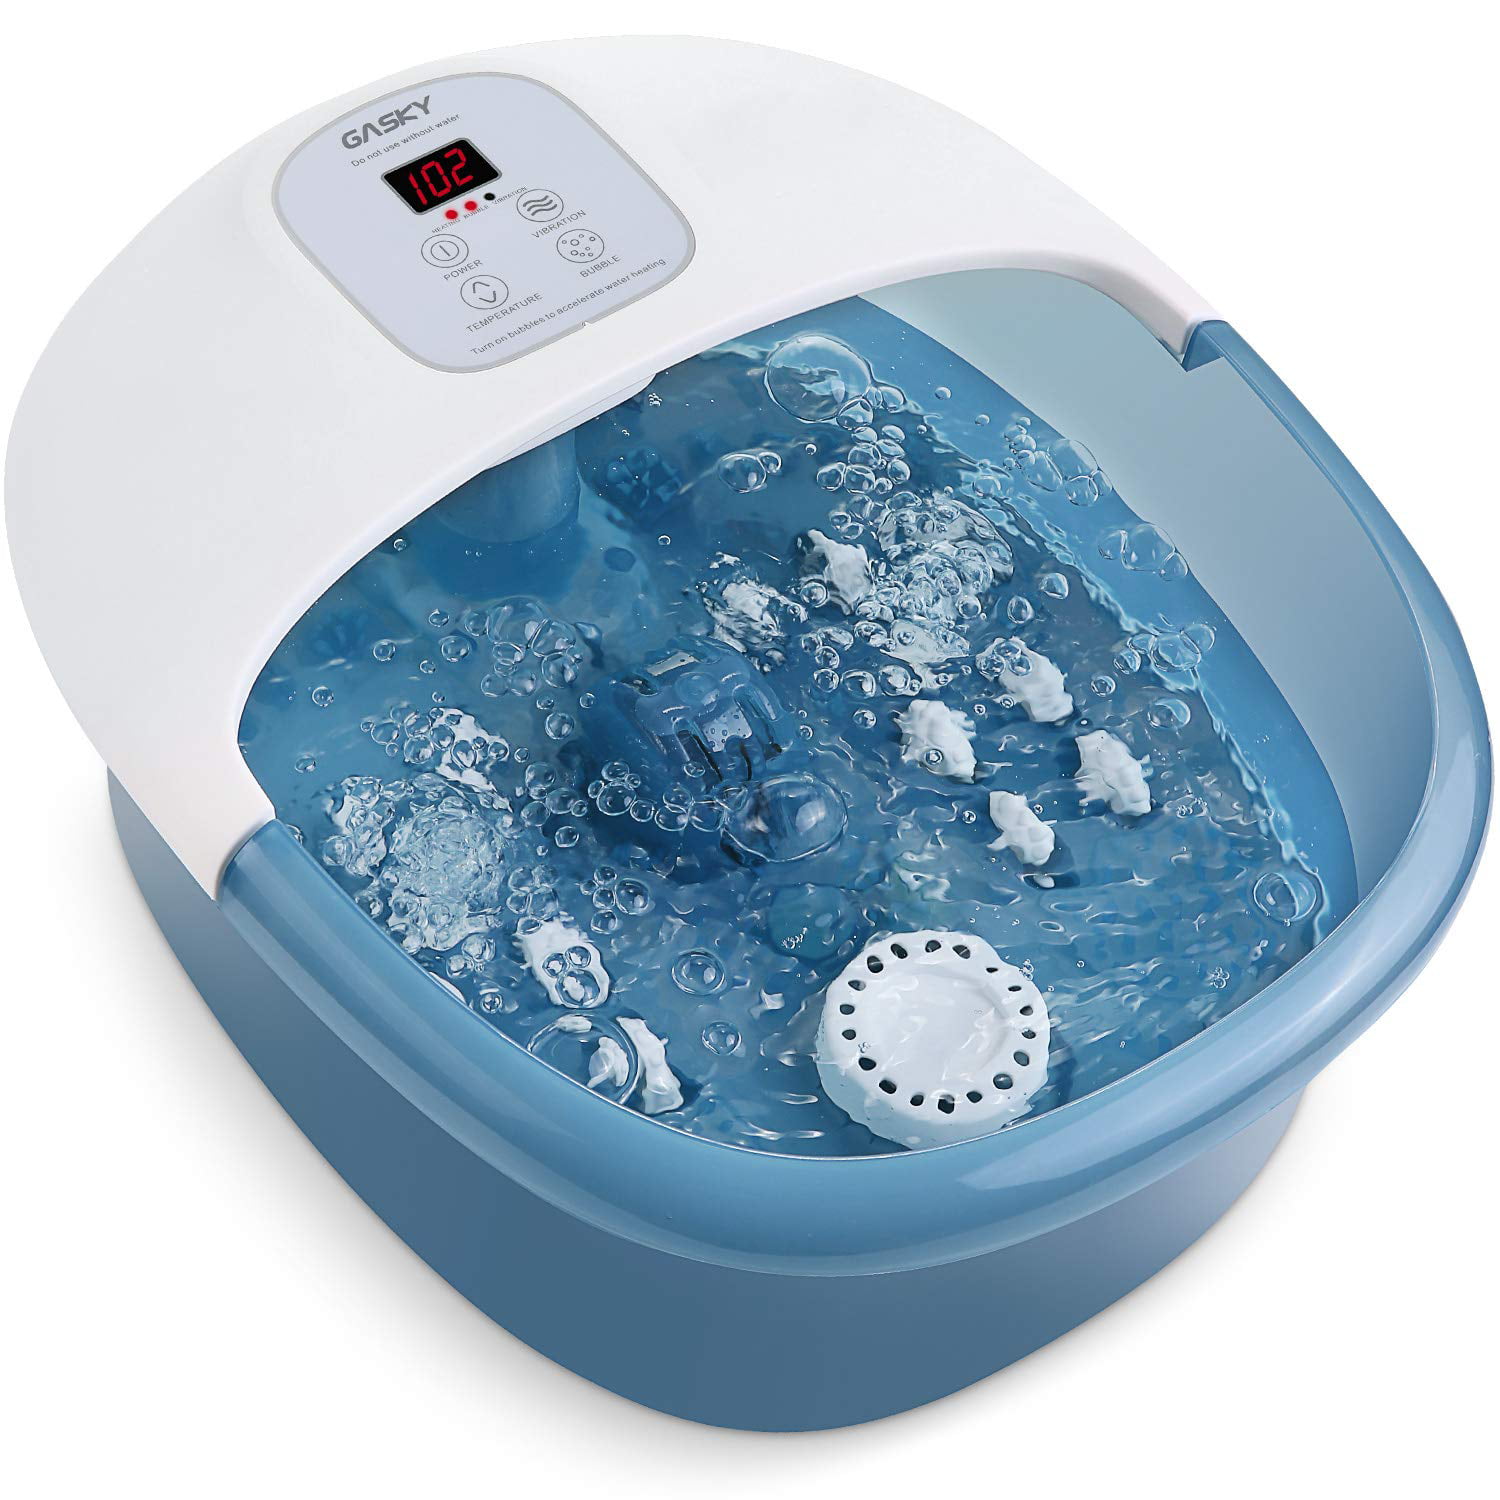 Foot Spa Bath Massager with Heat Bubbles Vibration, 14 Shiatsu